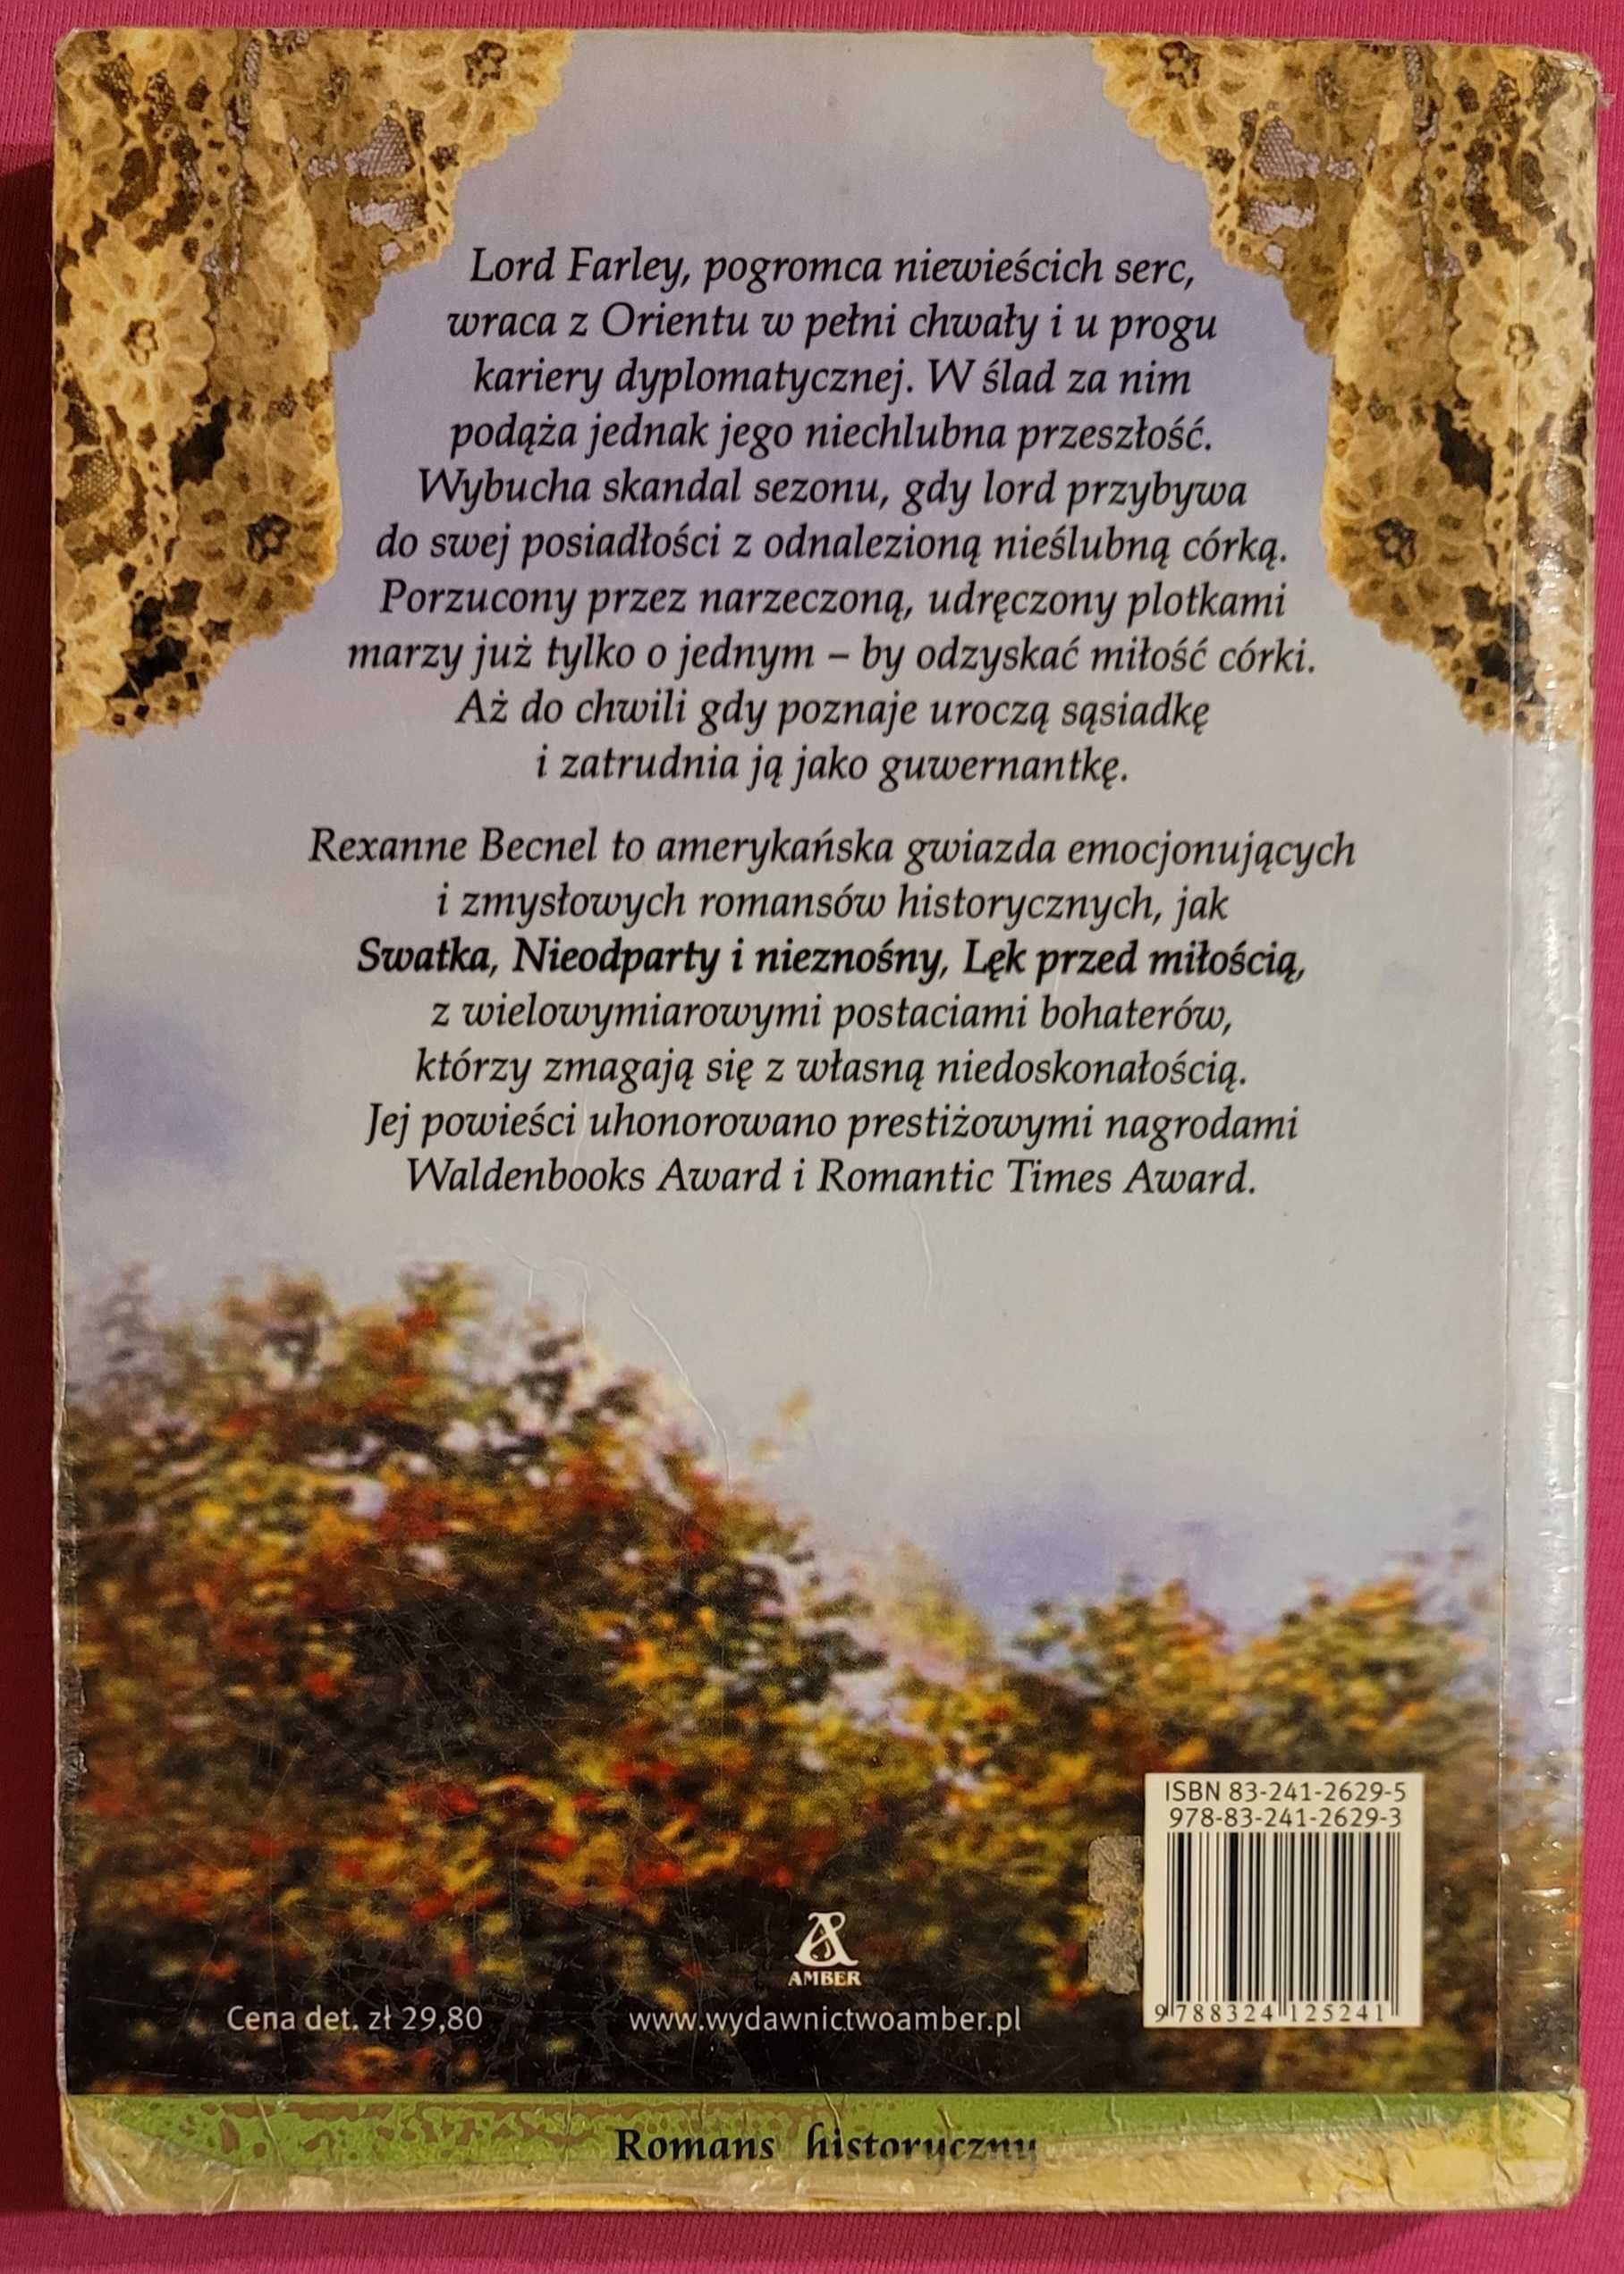 Romans historyczny "POGROMCA SERC" autorki Rexanne Becnel.